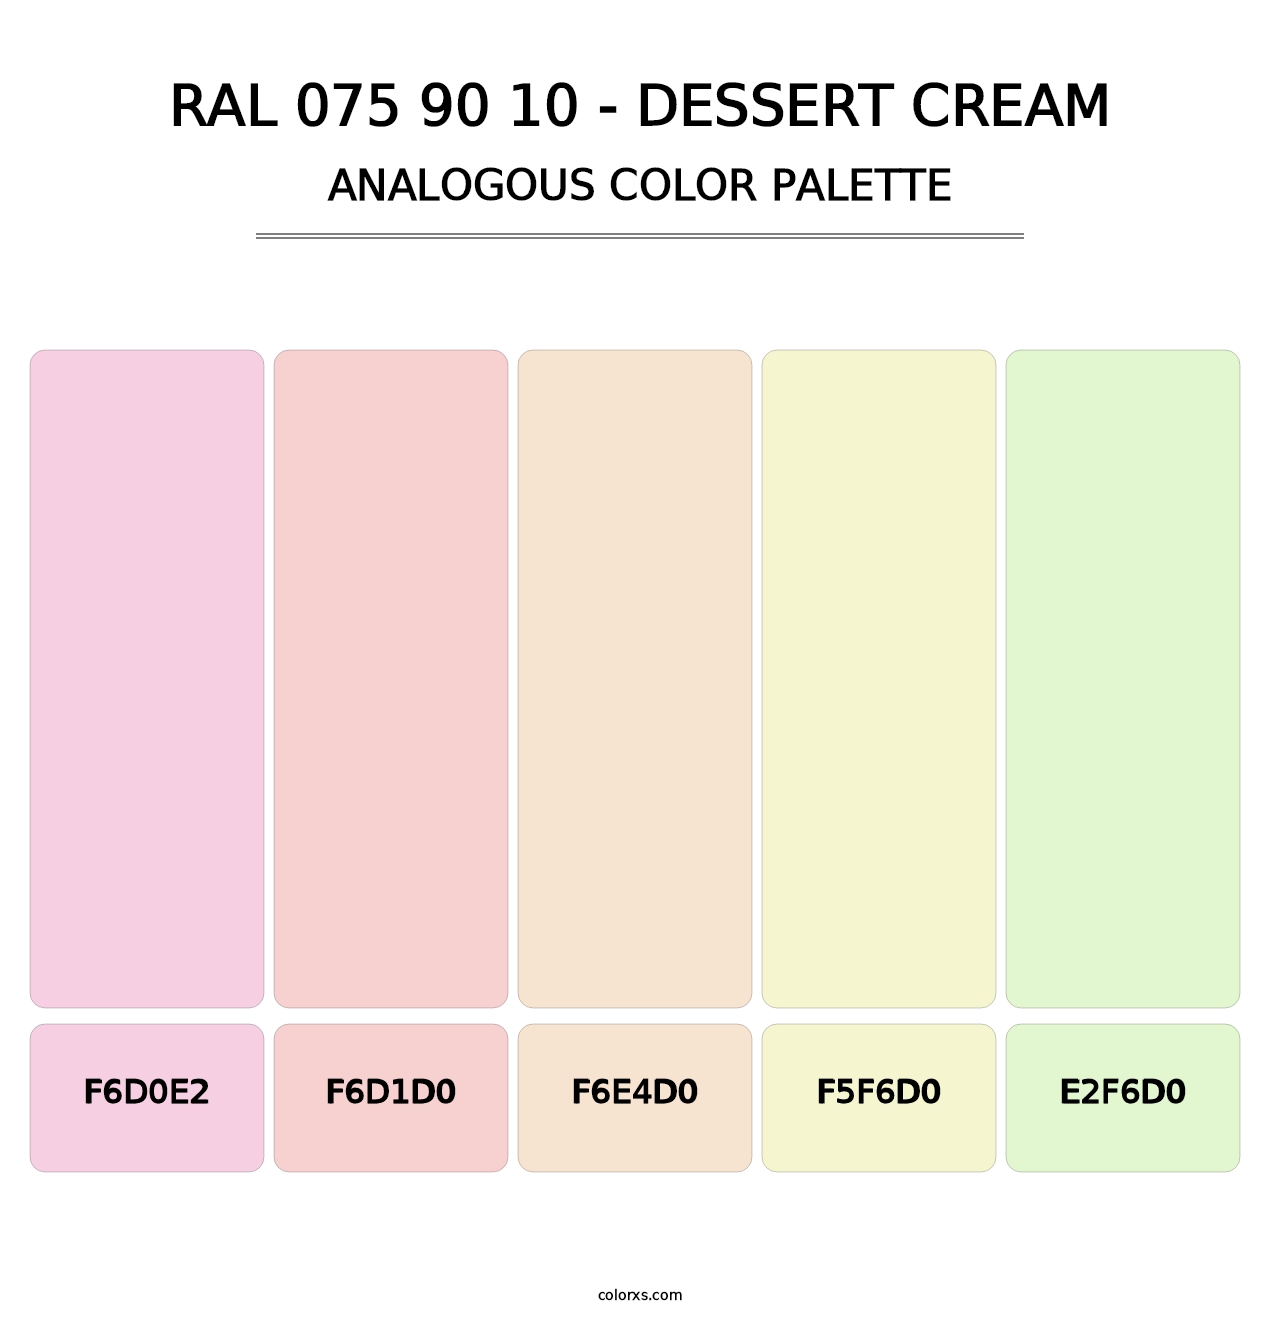 RAL 075 90 10 - Dessert Cream - Analogous Color Palette